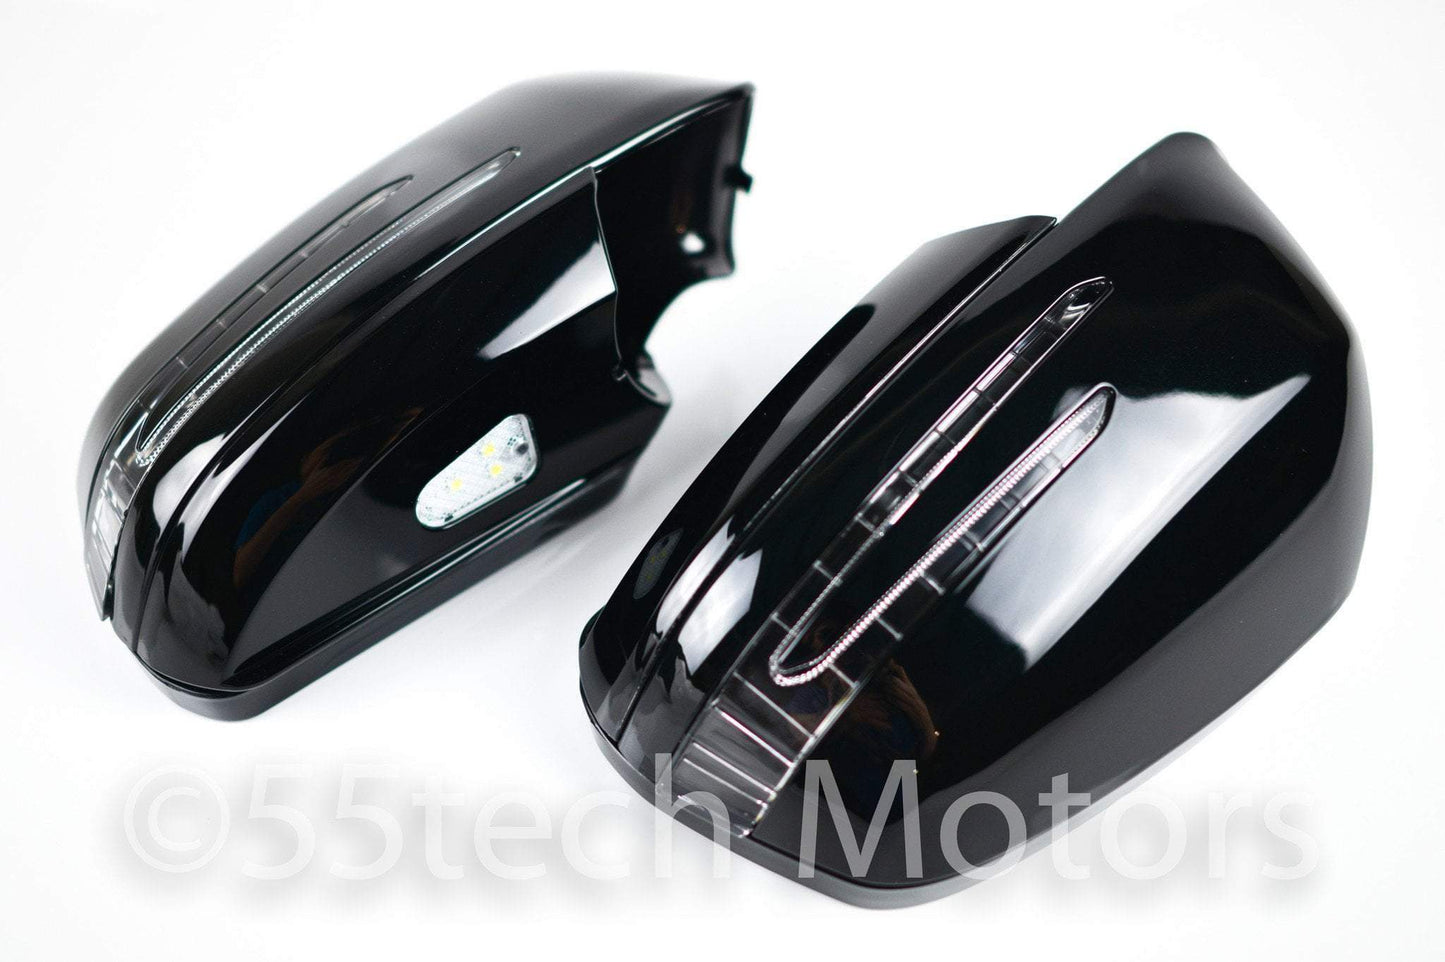 Mercedes W204 2008~2009 Carbon Fiber CF Mirror Covers /Black / Silver / White / Chrome - 55tech Motors